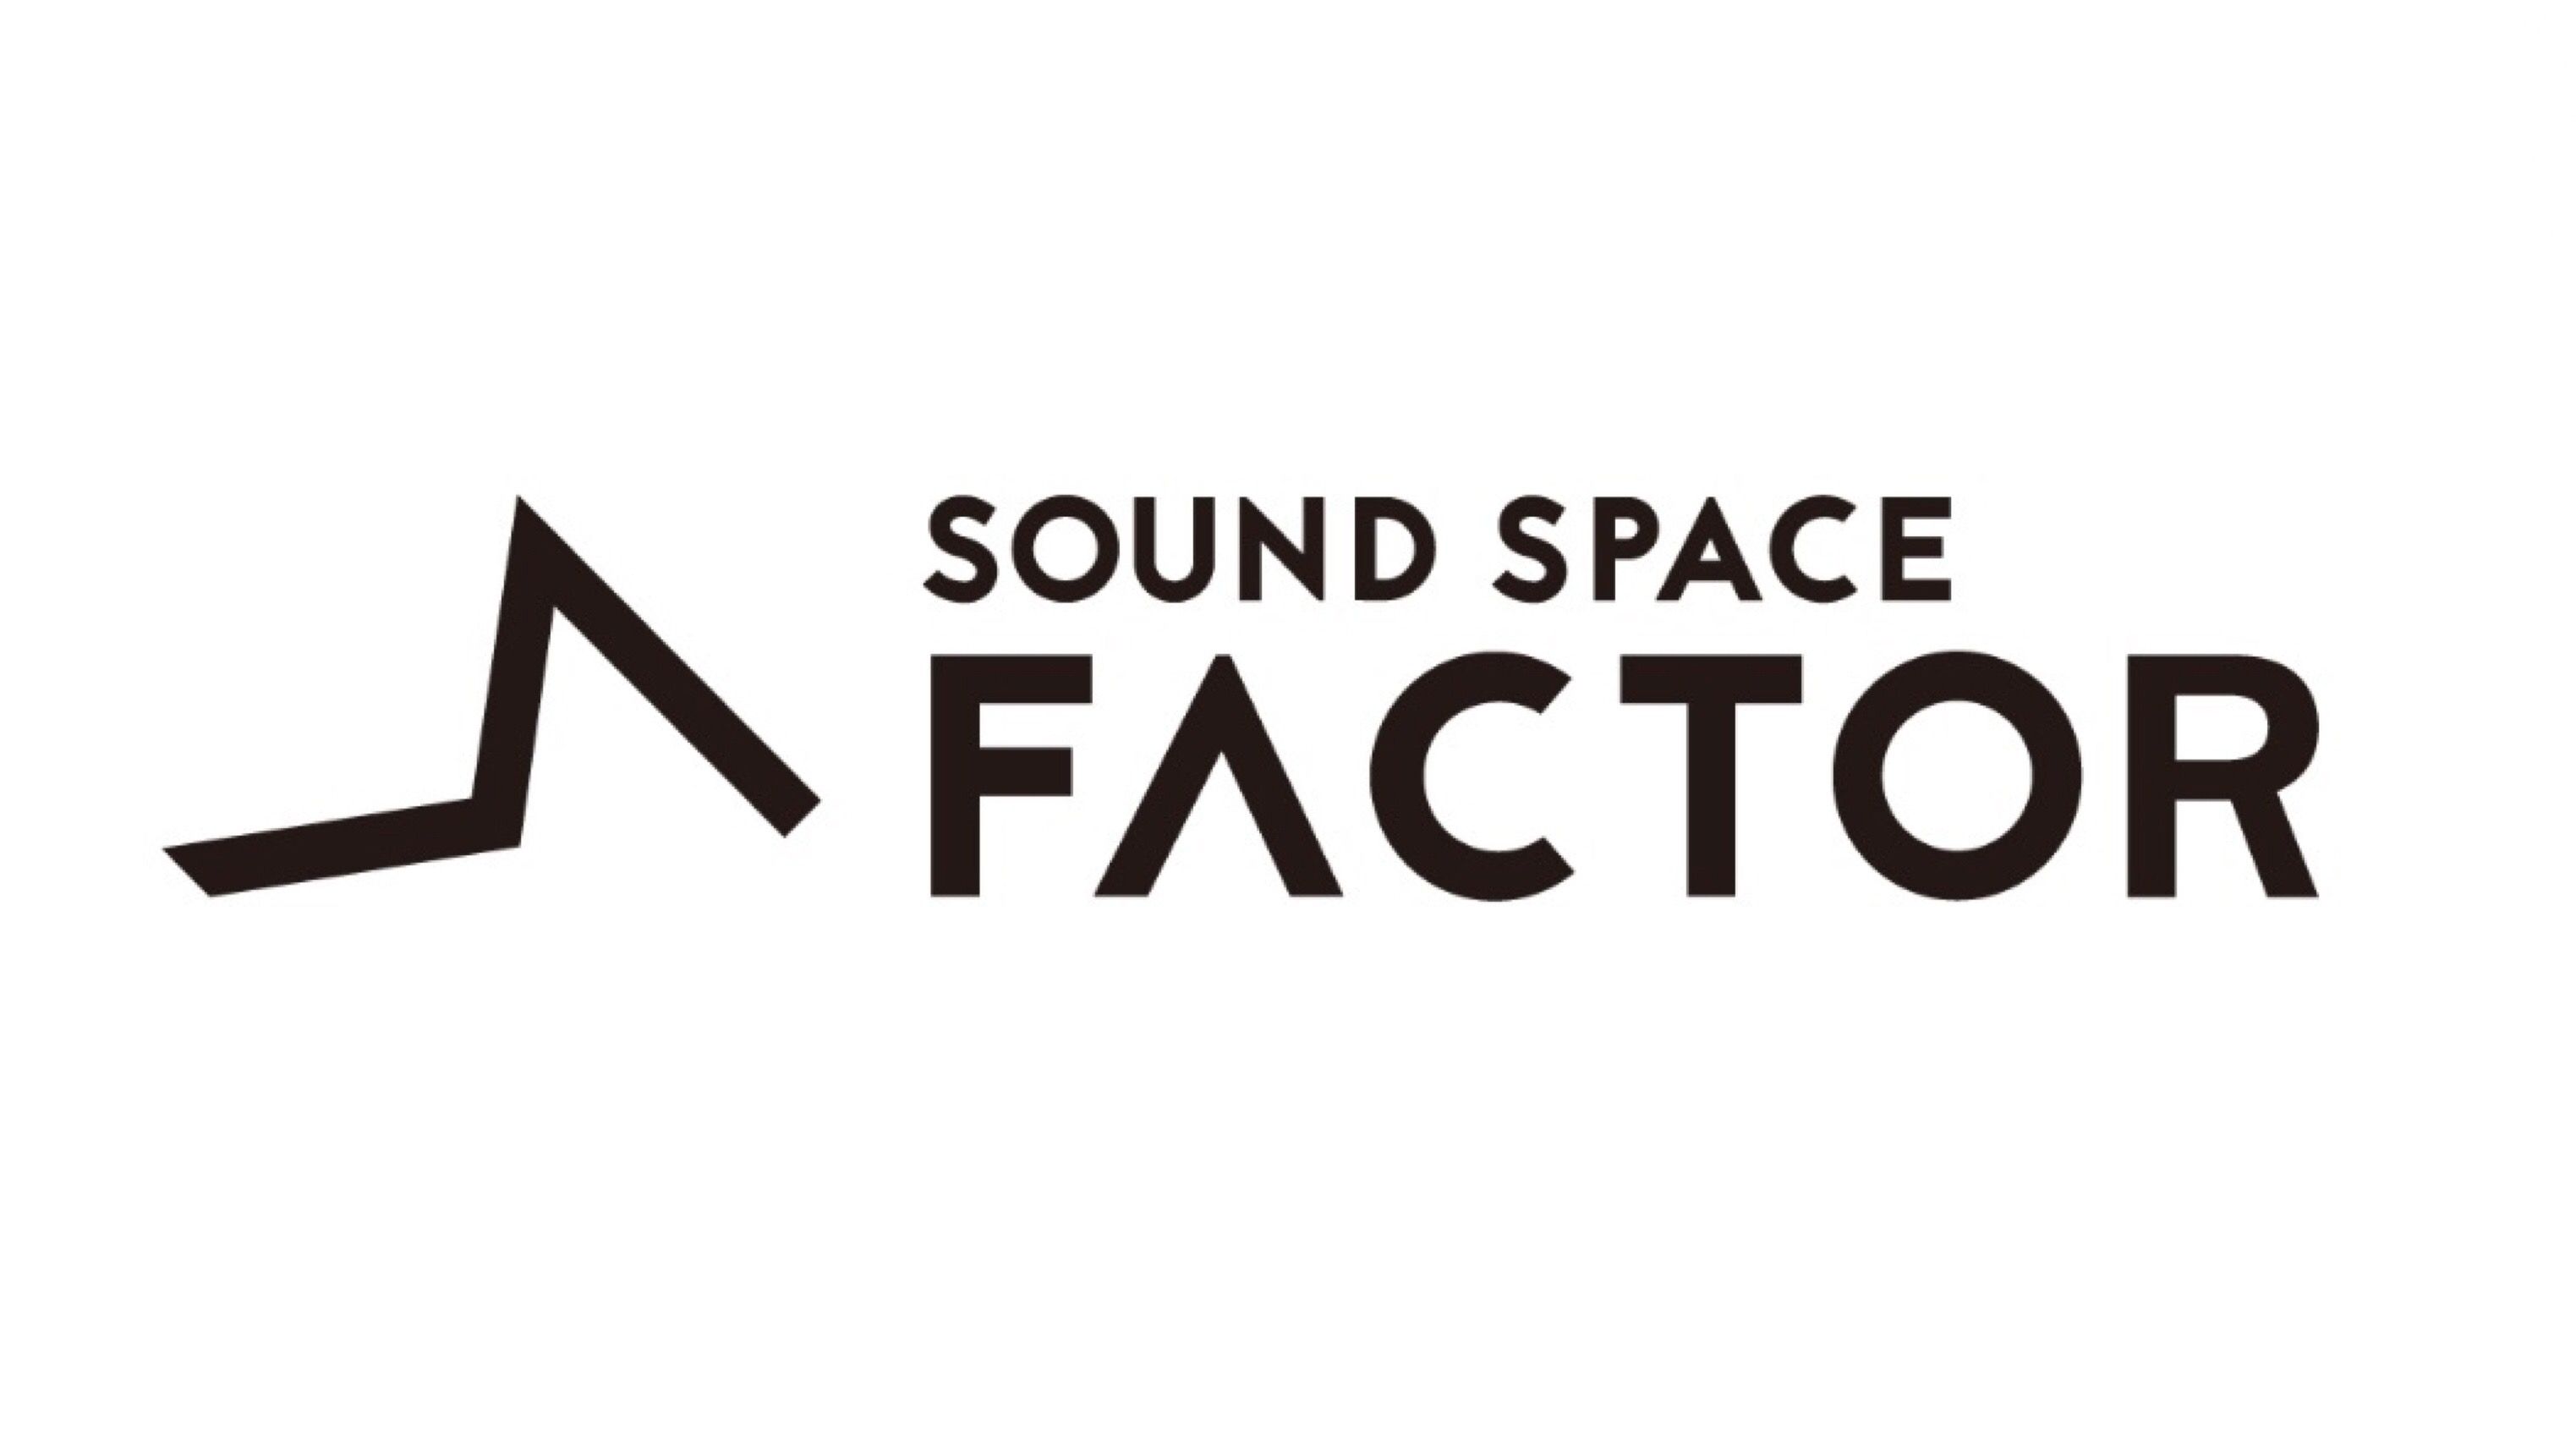 SOUND SPACE FACTOR